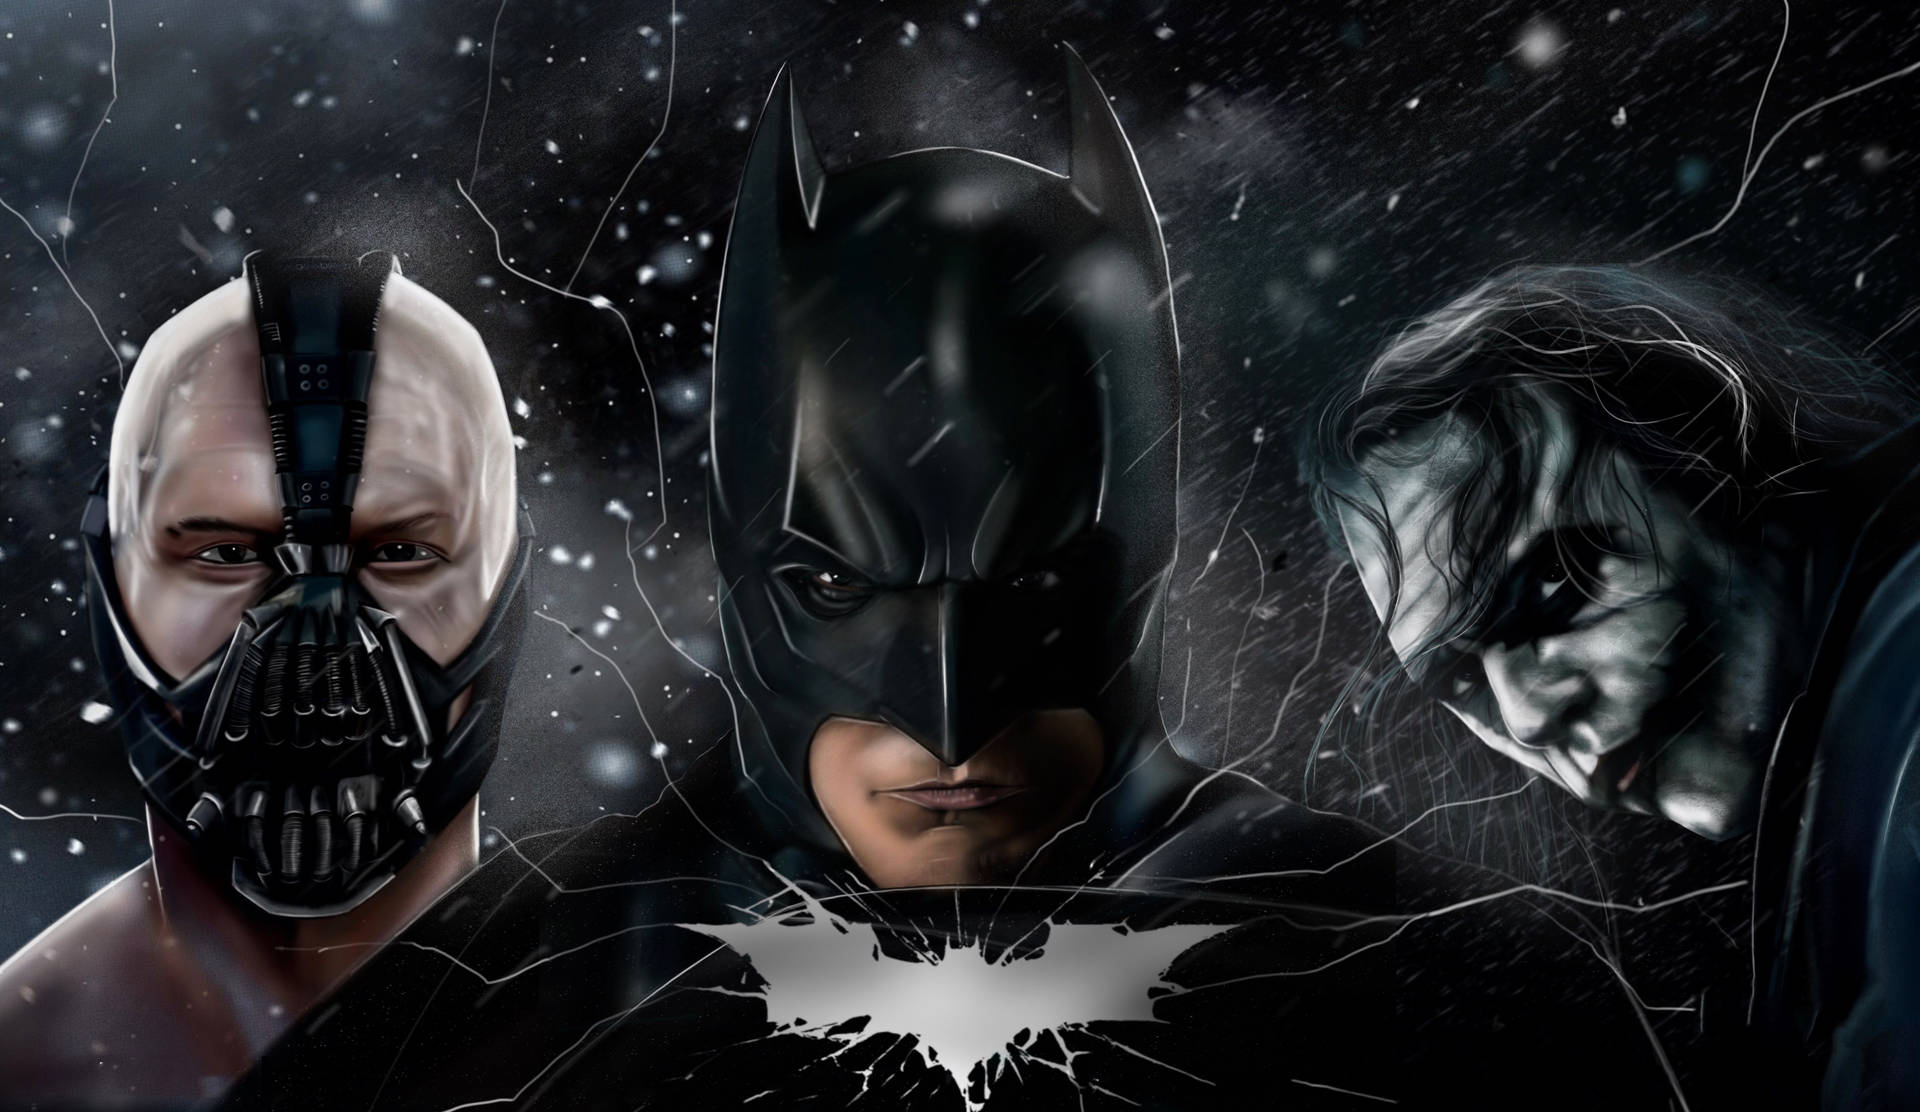 The Dark Knight Batman Bane And Joker Artwork